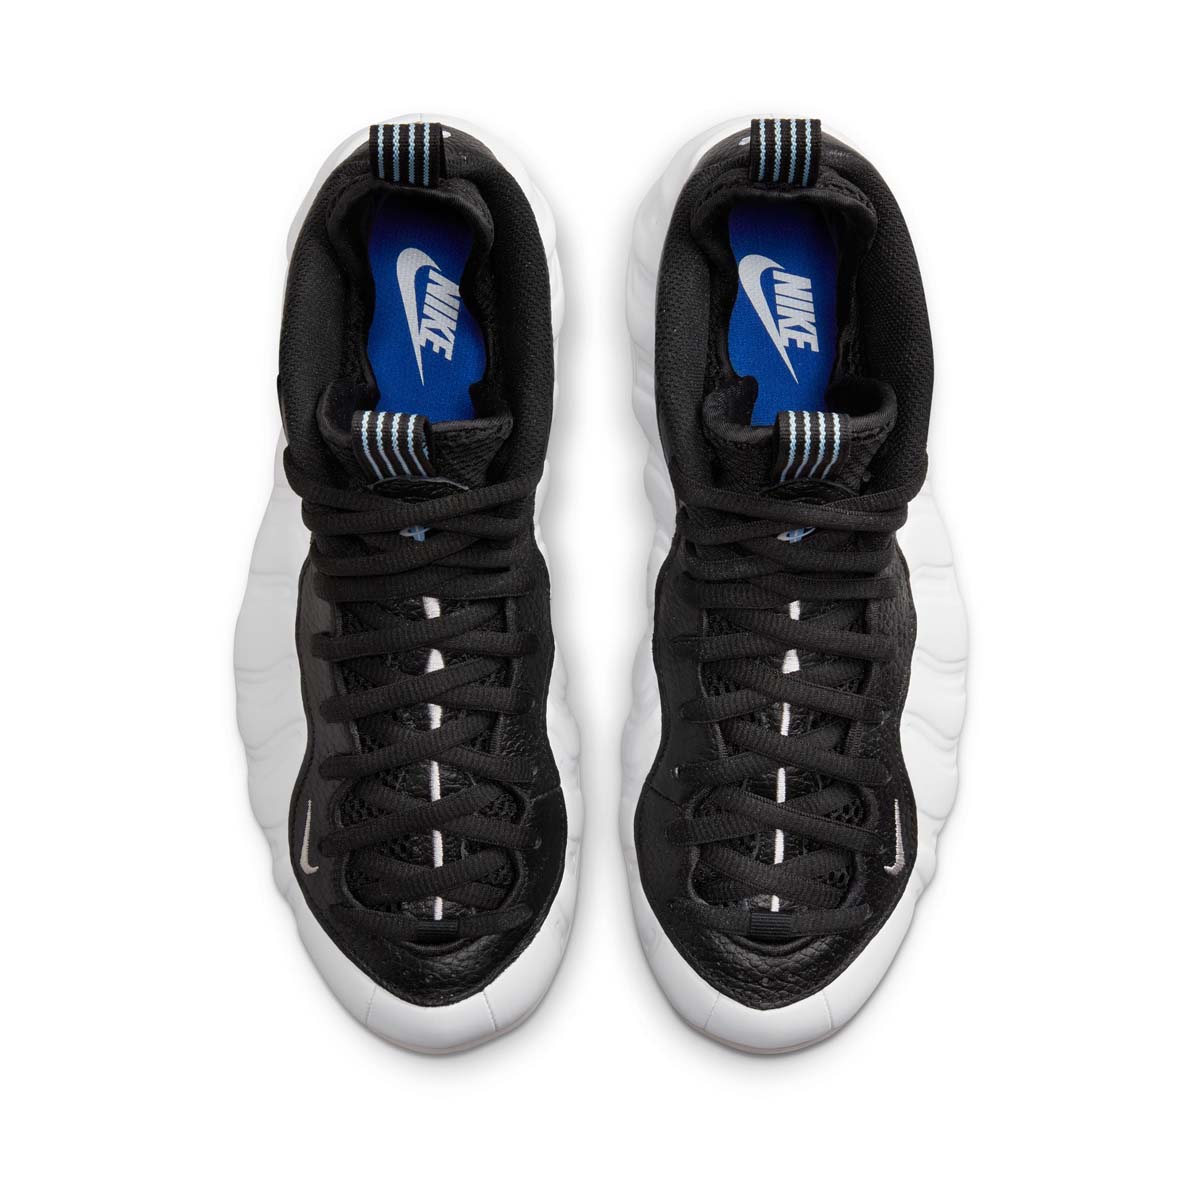 Nike Air Foamposite One Men's Shoes